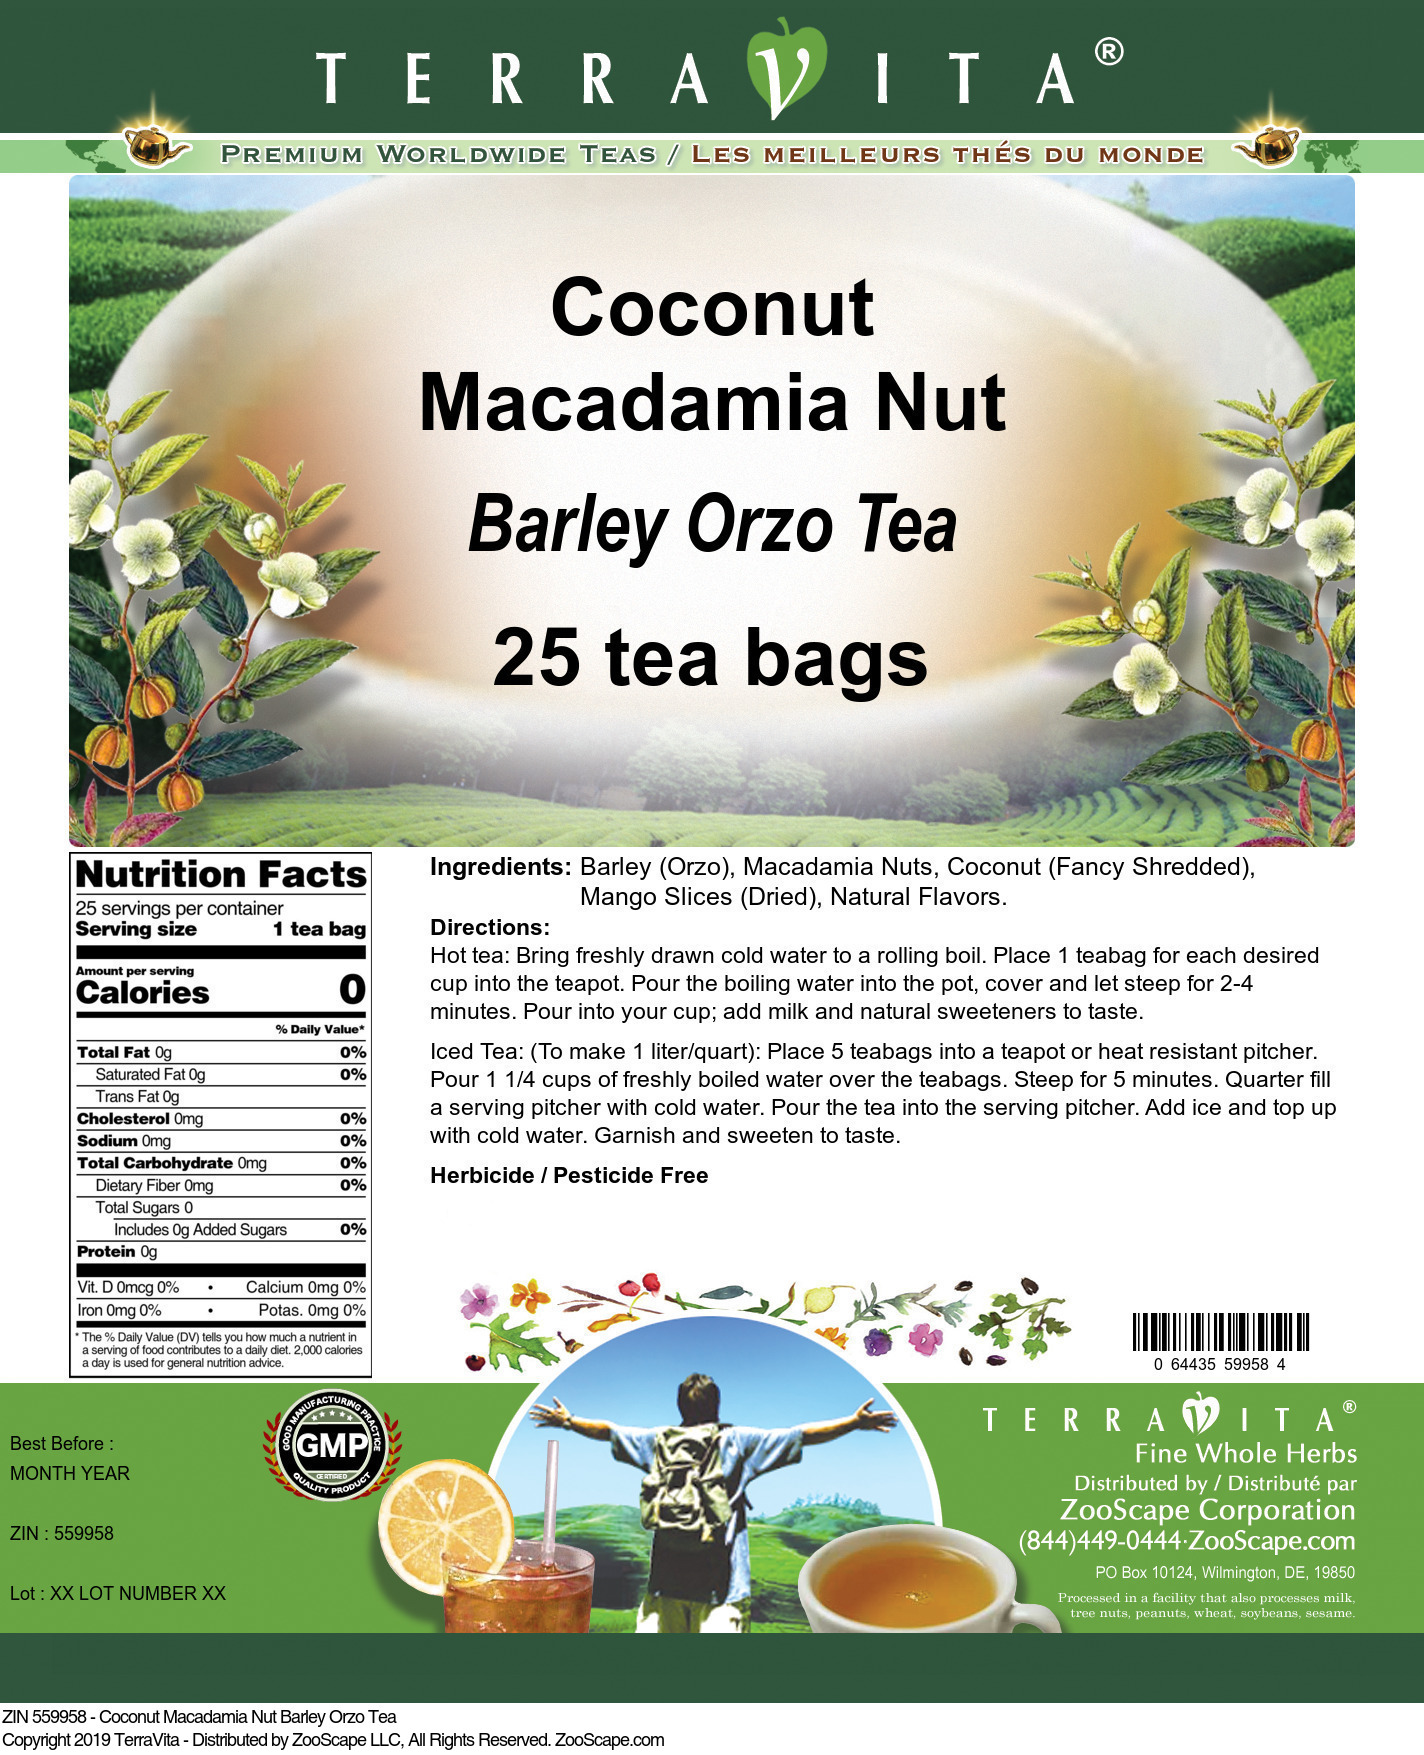 Coconut Macadamia Nut Barley Orzo Tea - Label